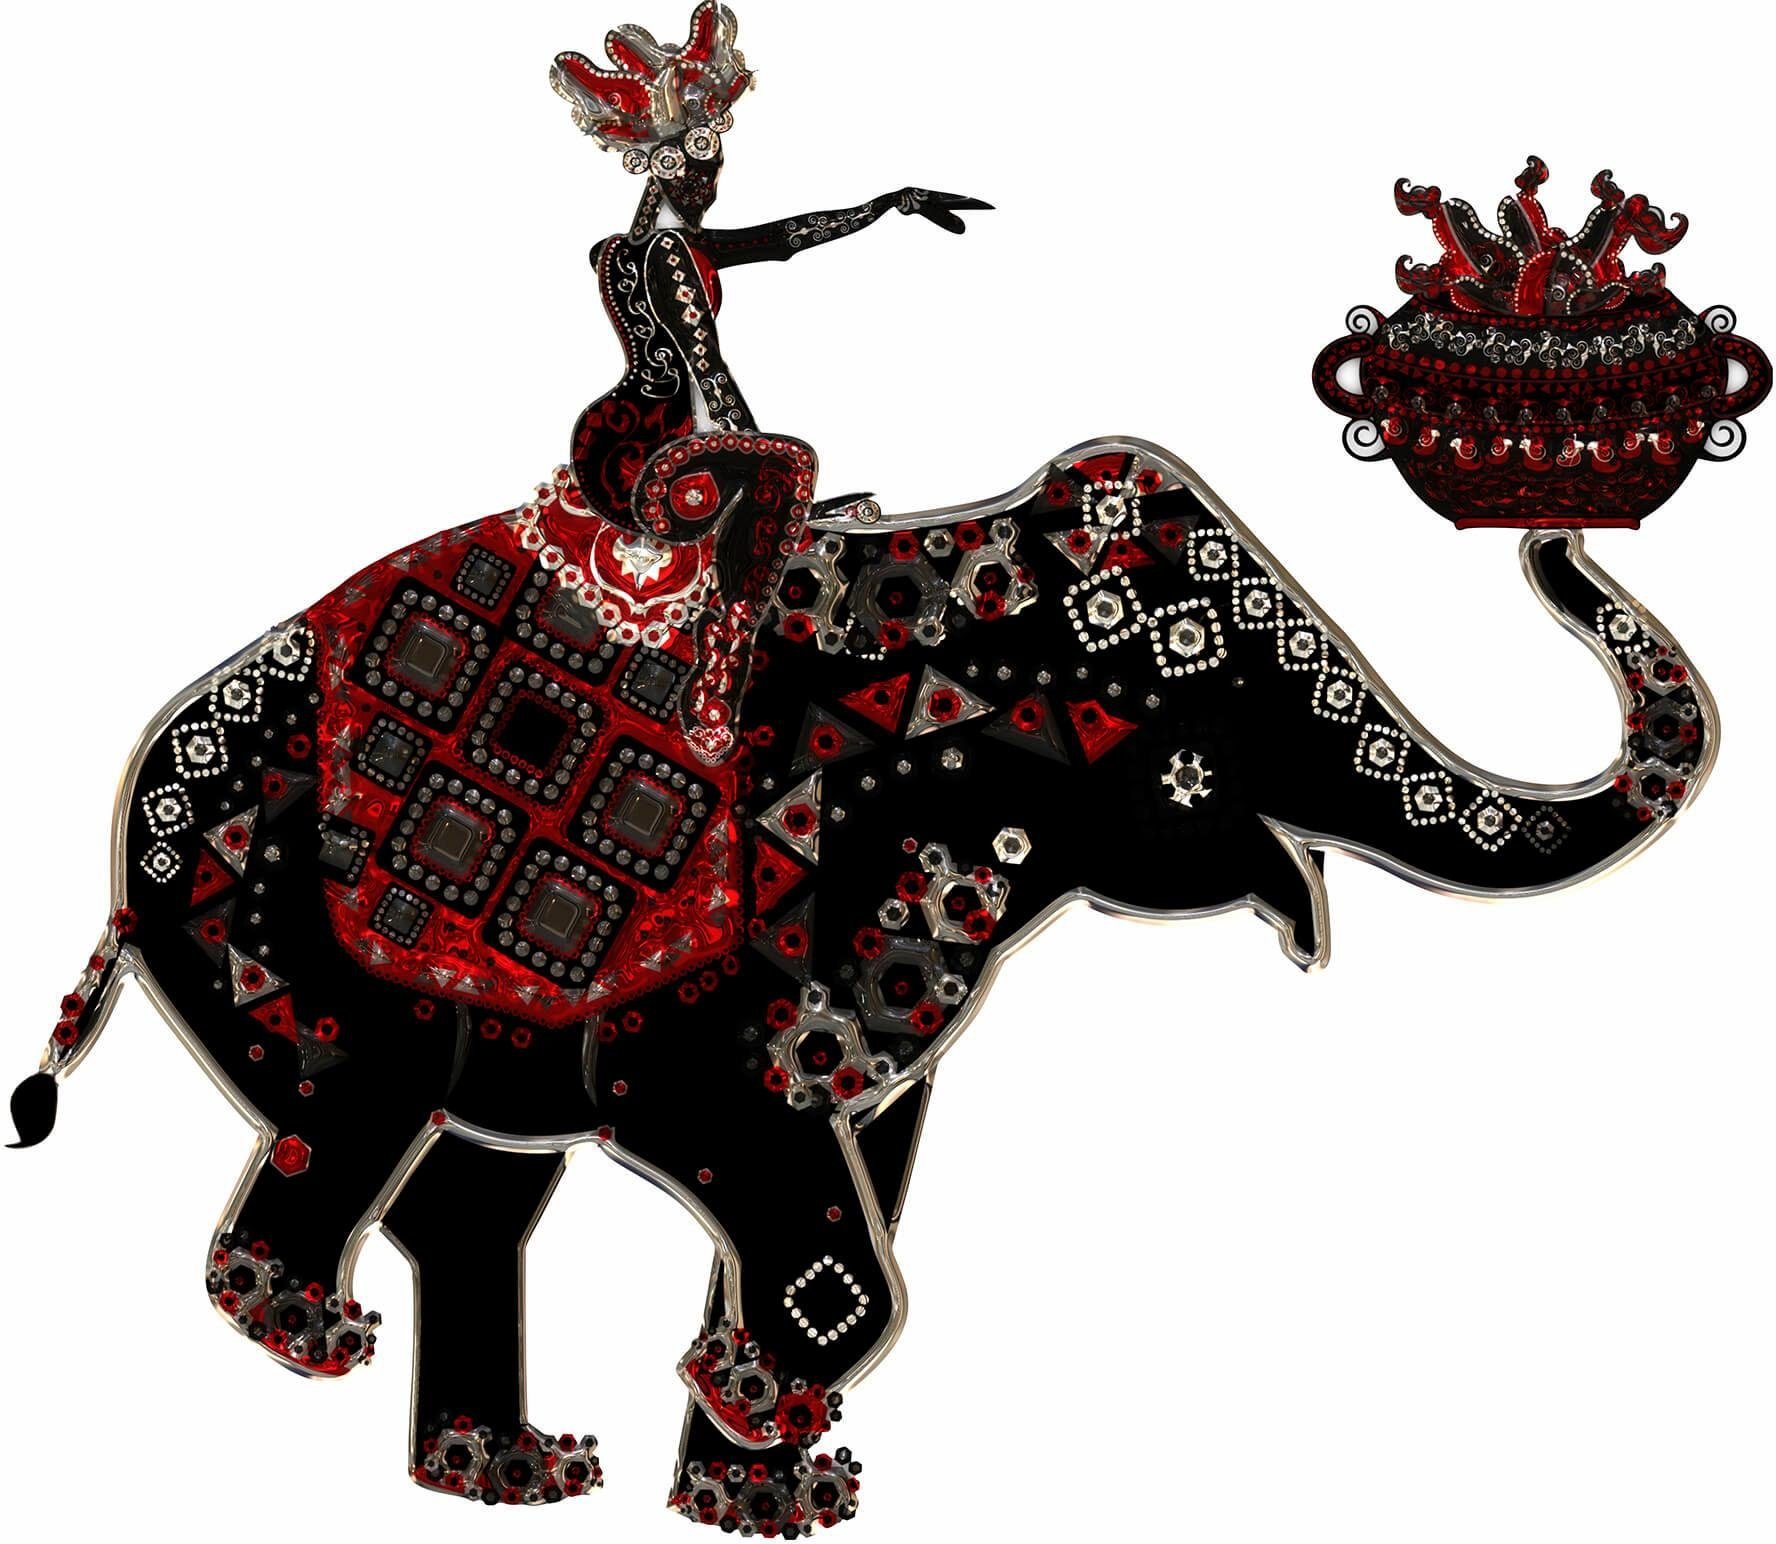 Wall-Art Wandtattoo Metallic Elephant Ride